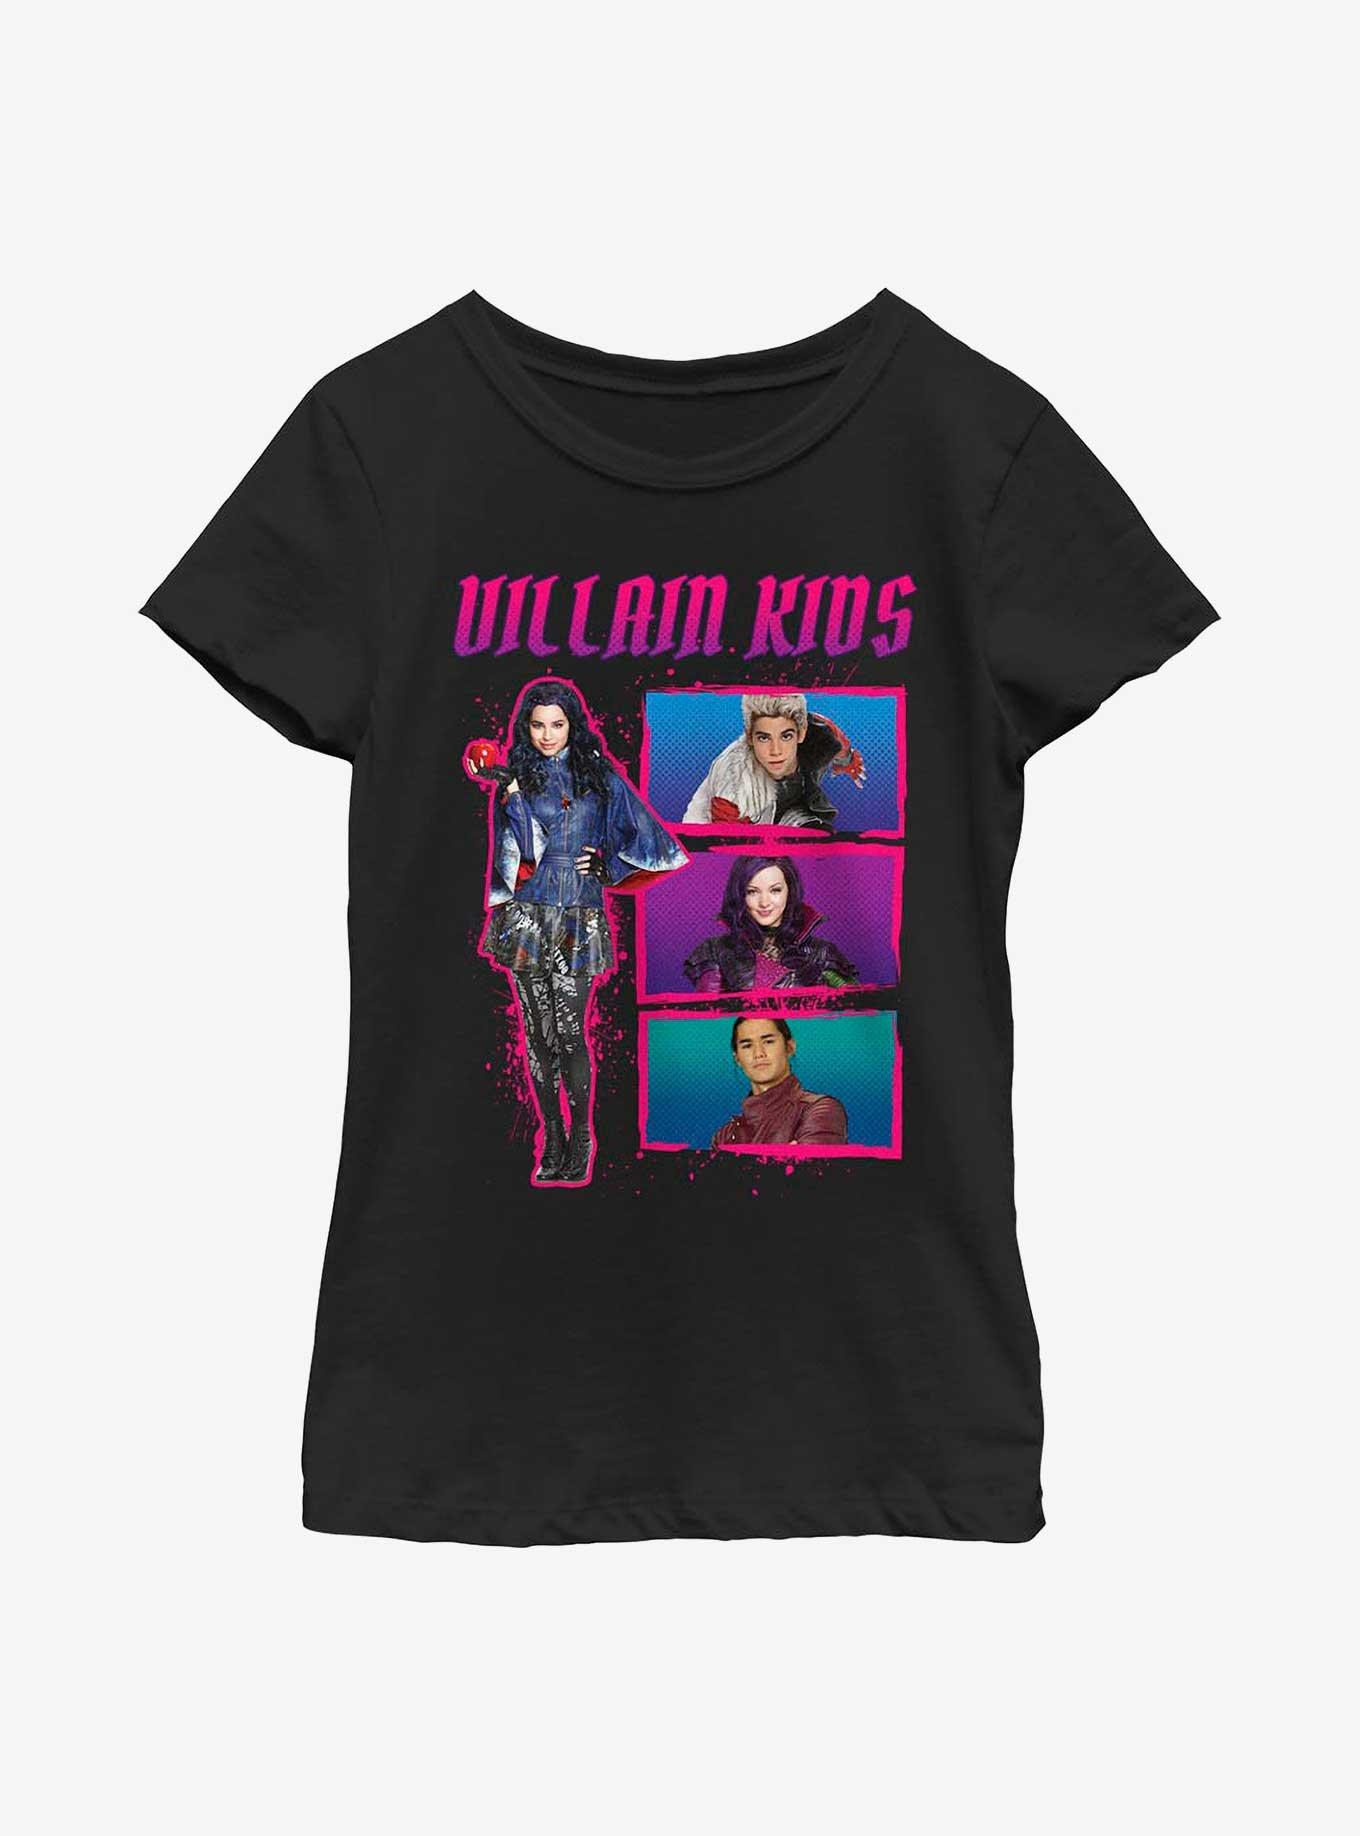 Disney Descendants Villain Kids Box Up Youth Girls T-Shirt, , hi-res